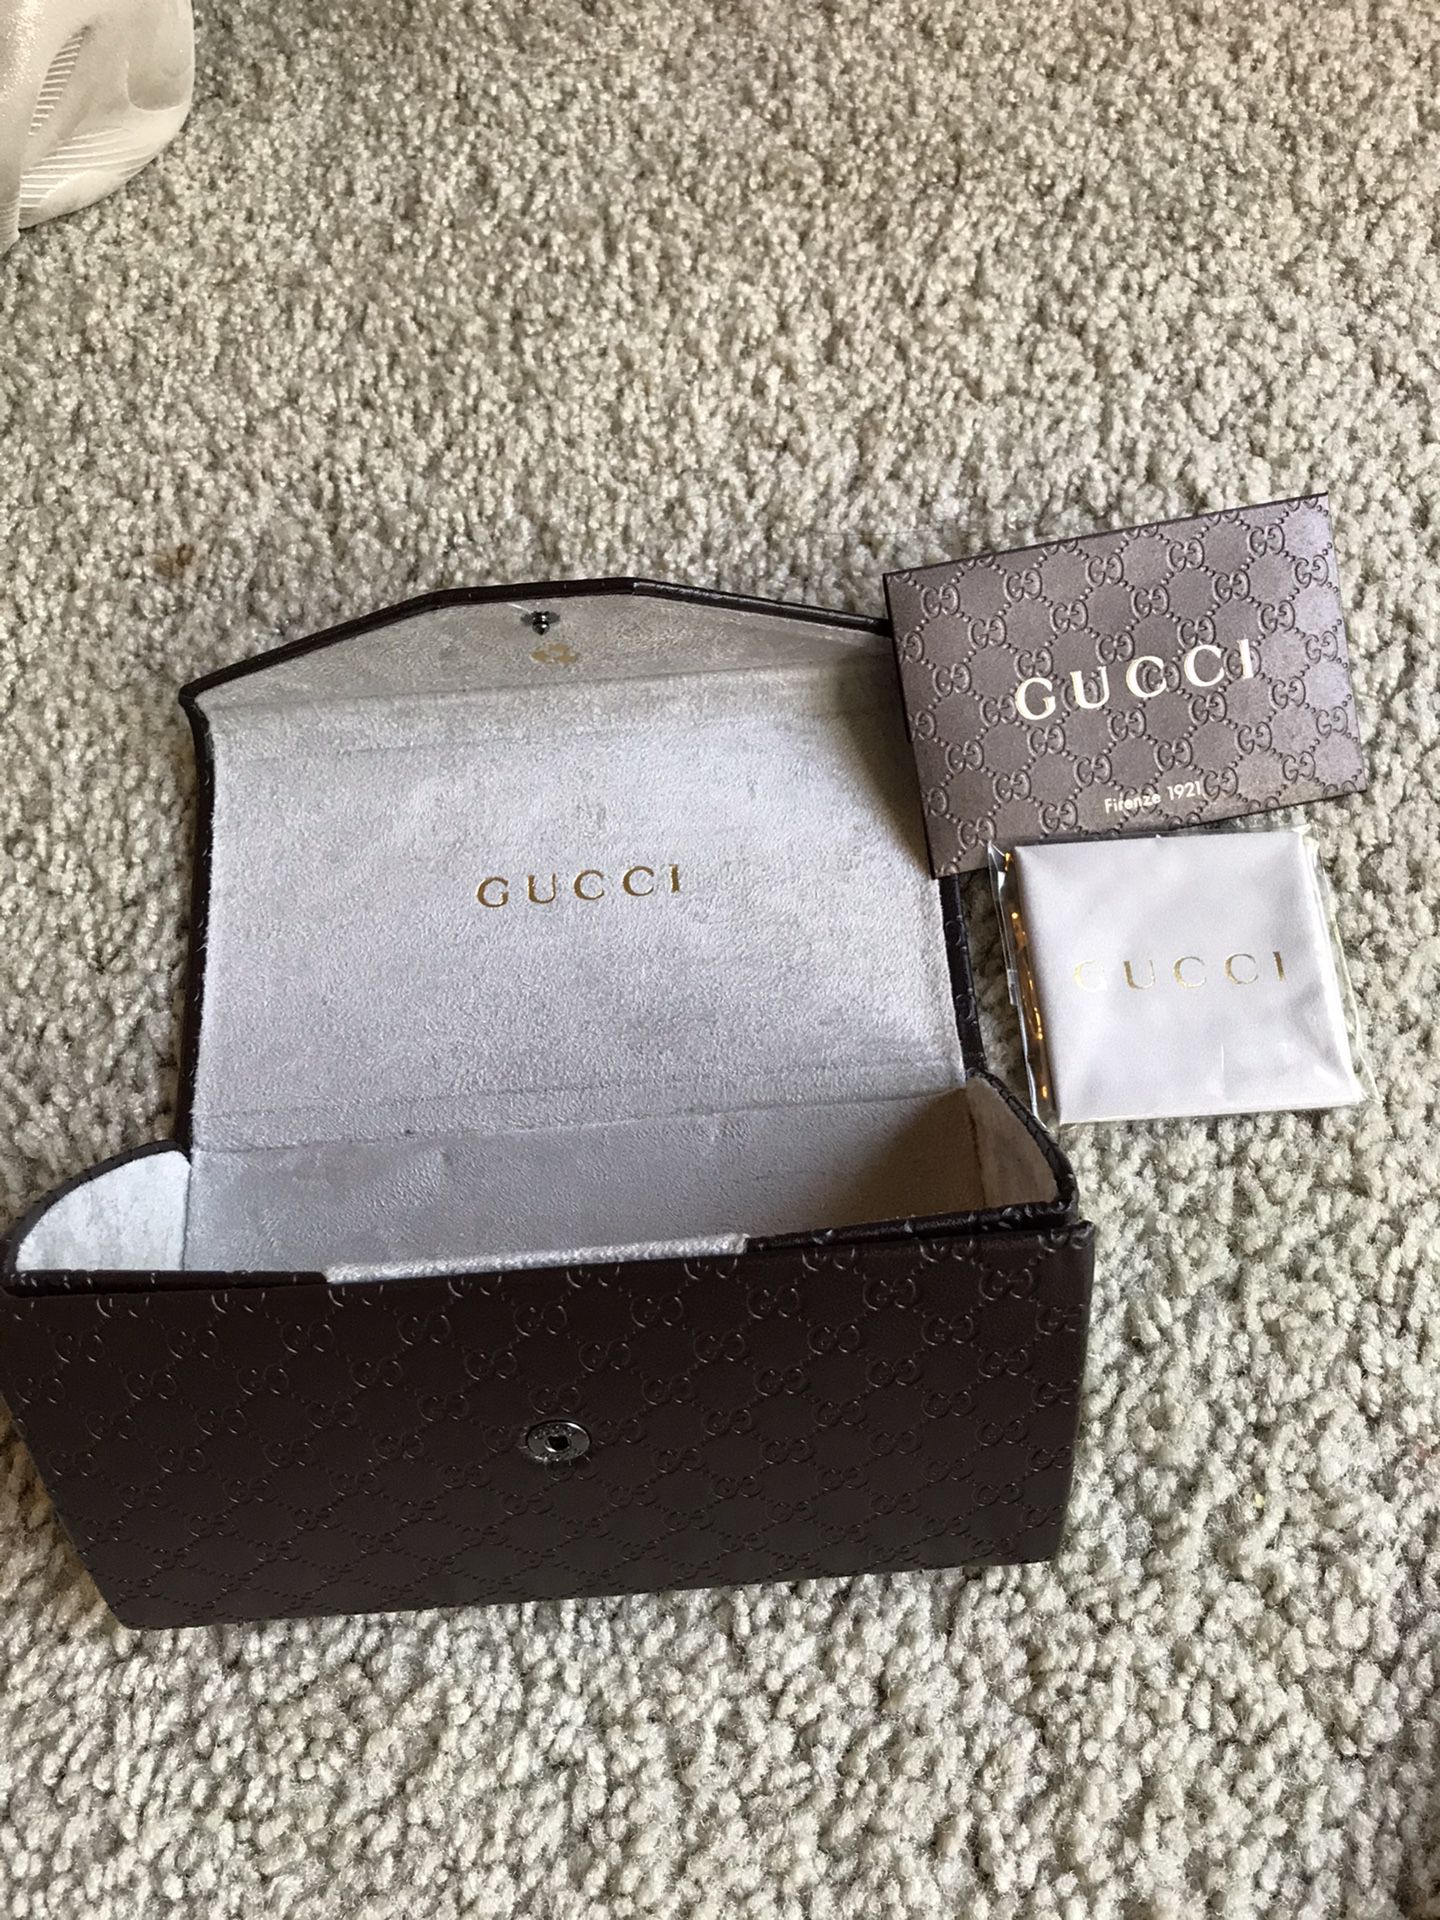 Gucci authentic sunglasses case+authentic card+cloth/all brand new💯